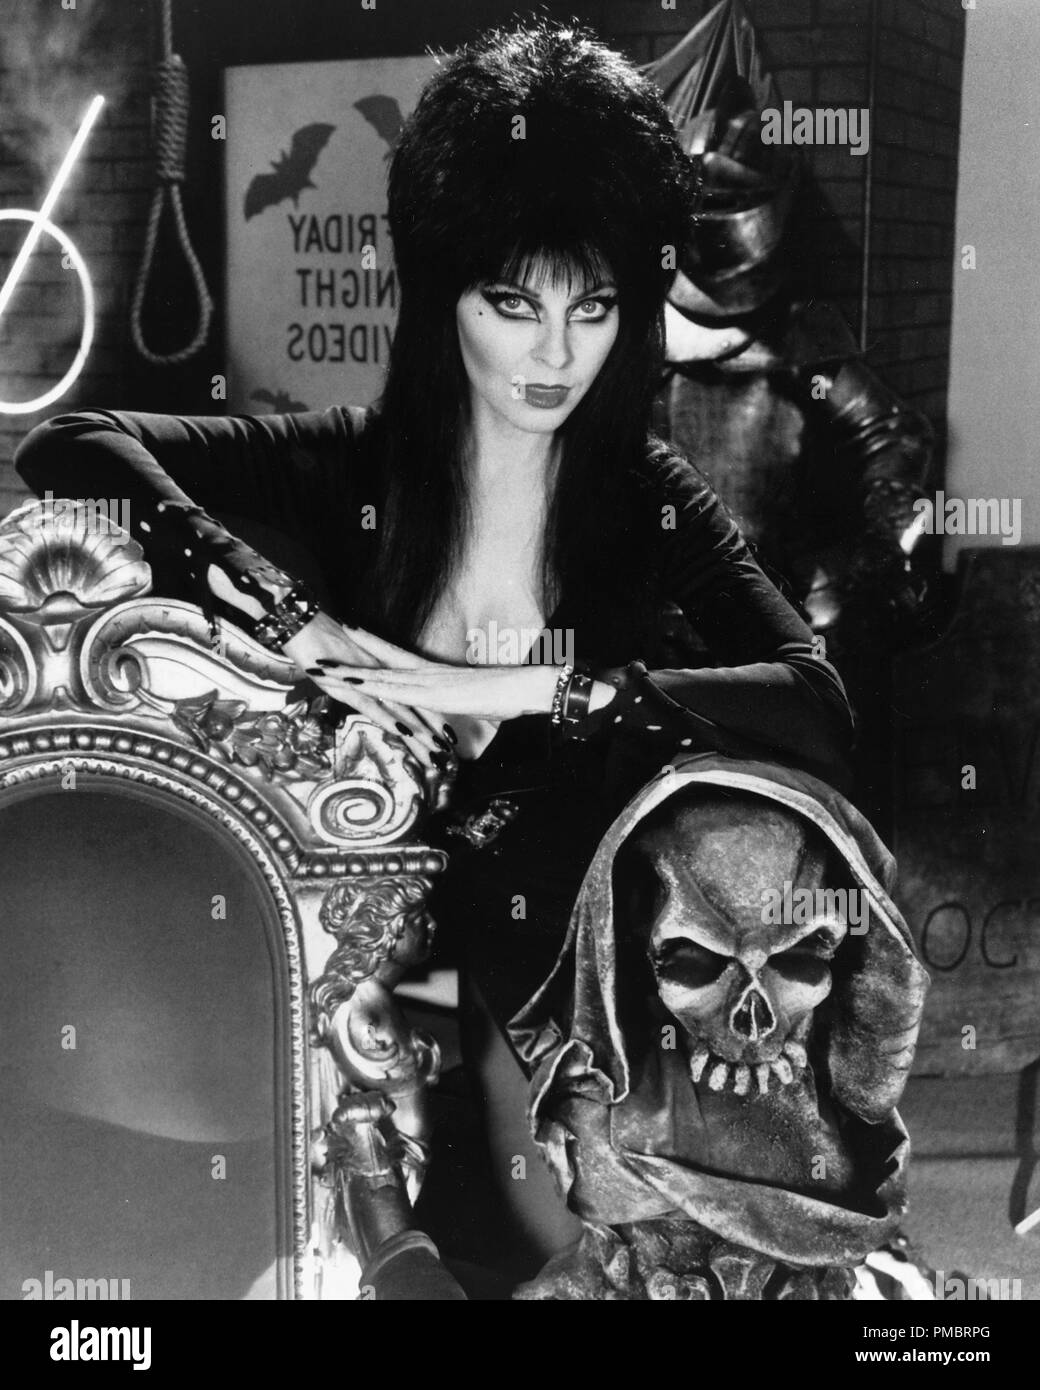 Studio Publicity Still of Elvira (Cassandra Peterson)  circa 1987  File Reference # 32914 007THA Stock Photo